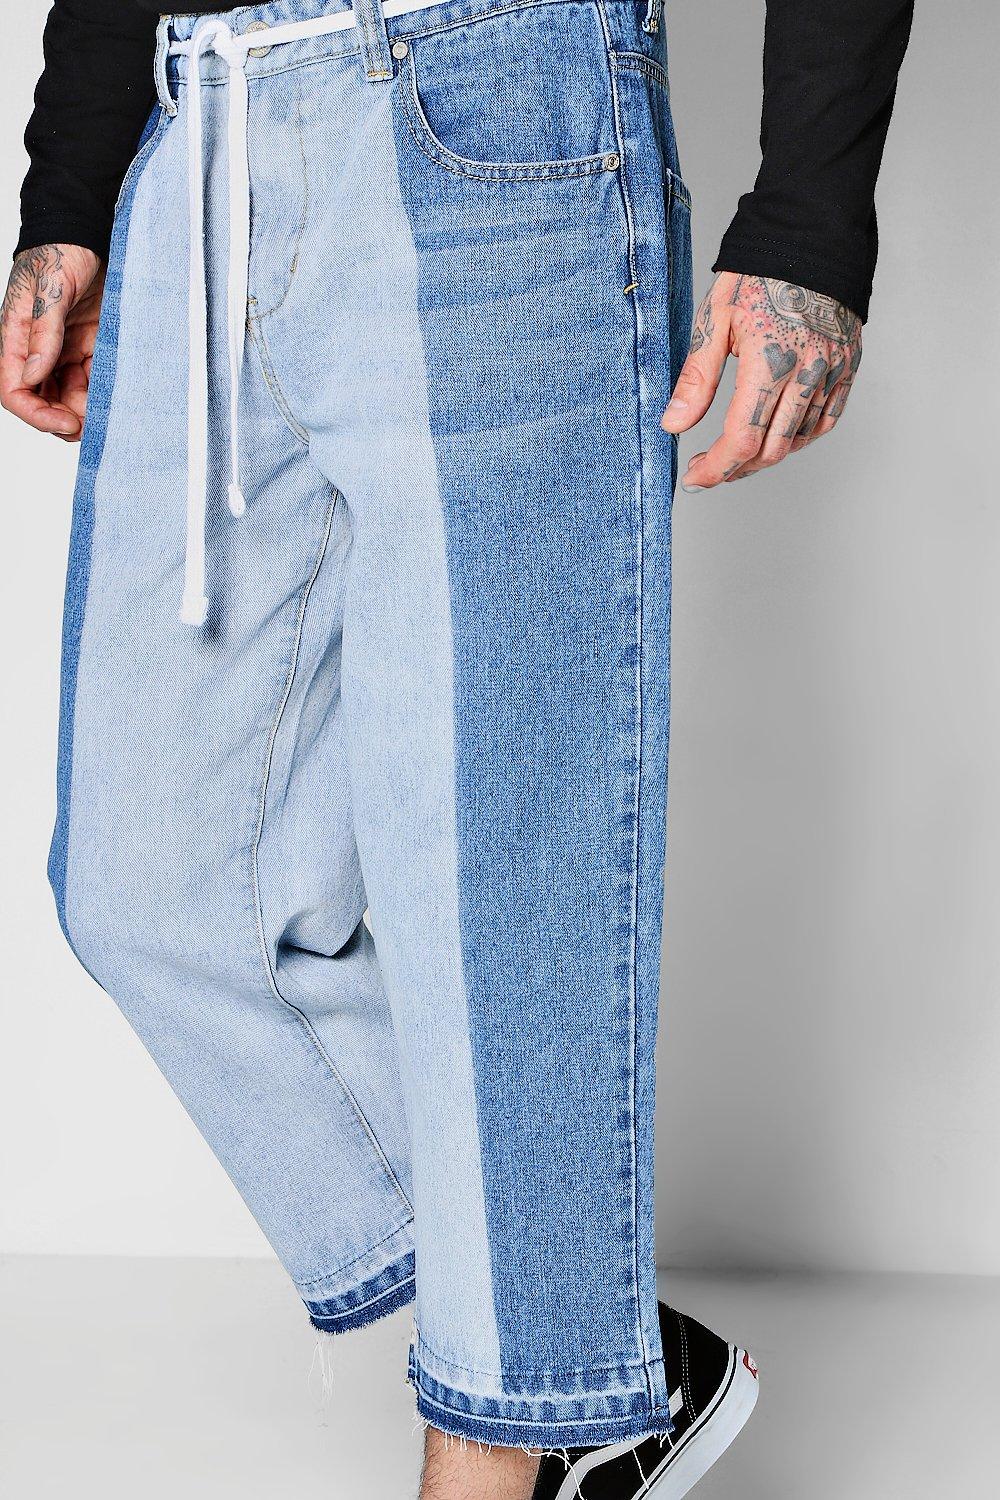 half jeans